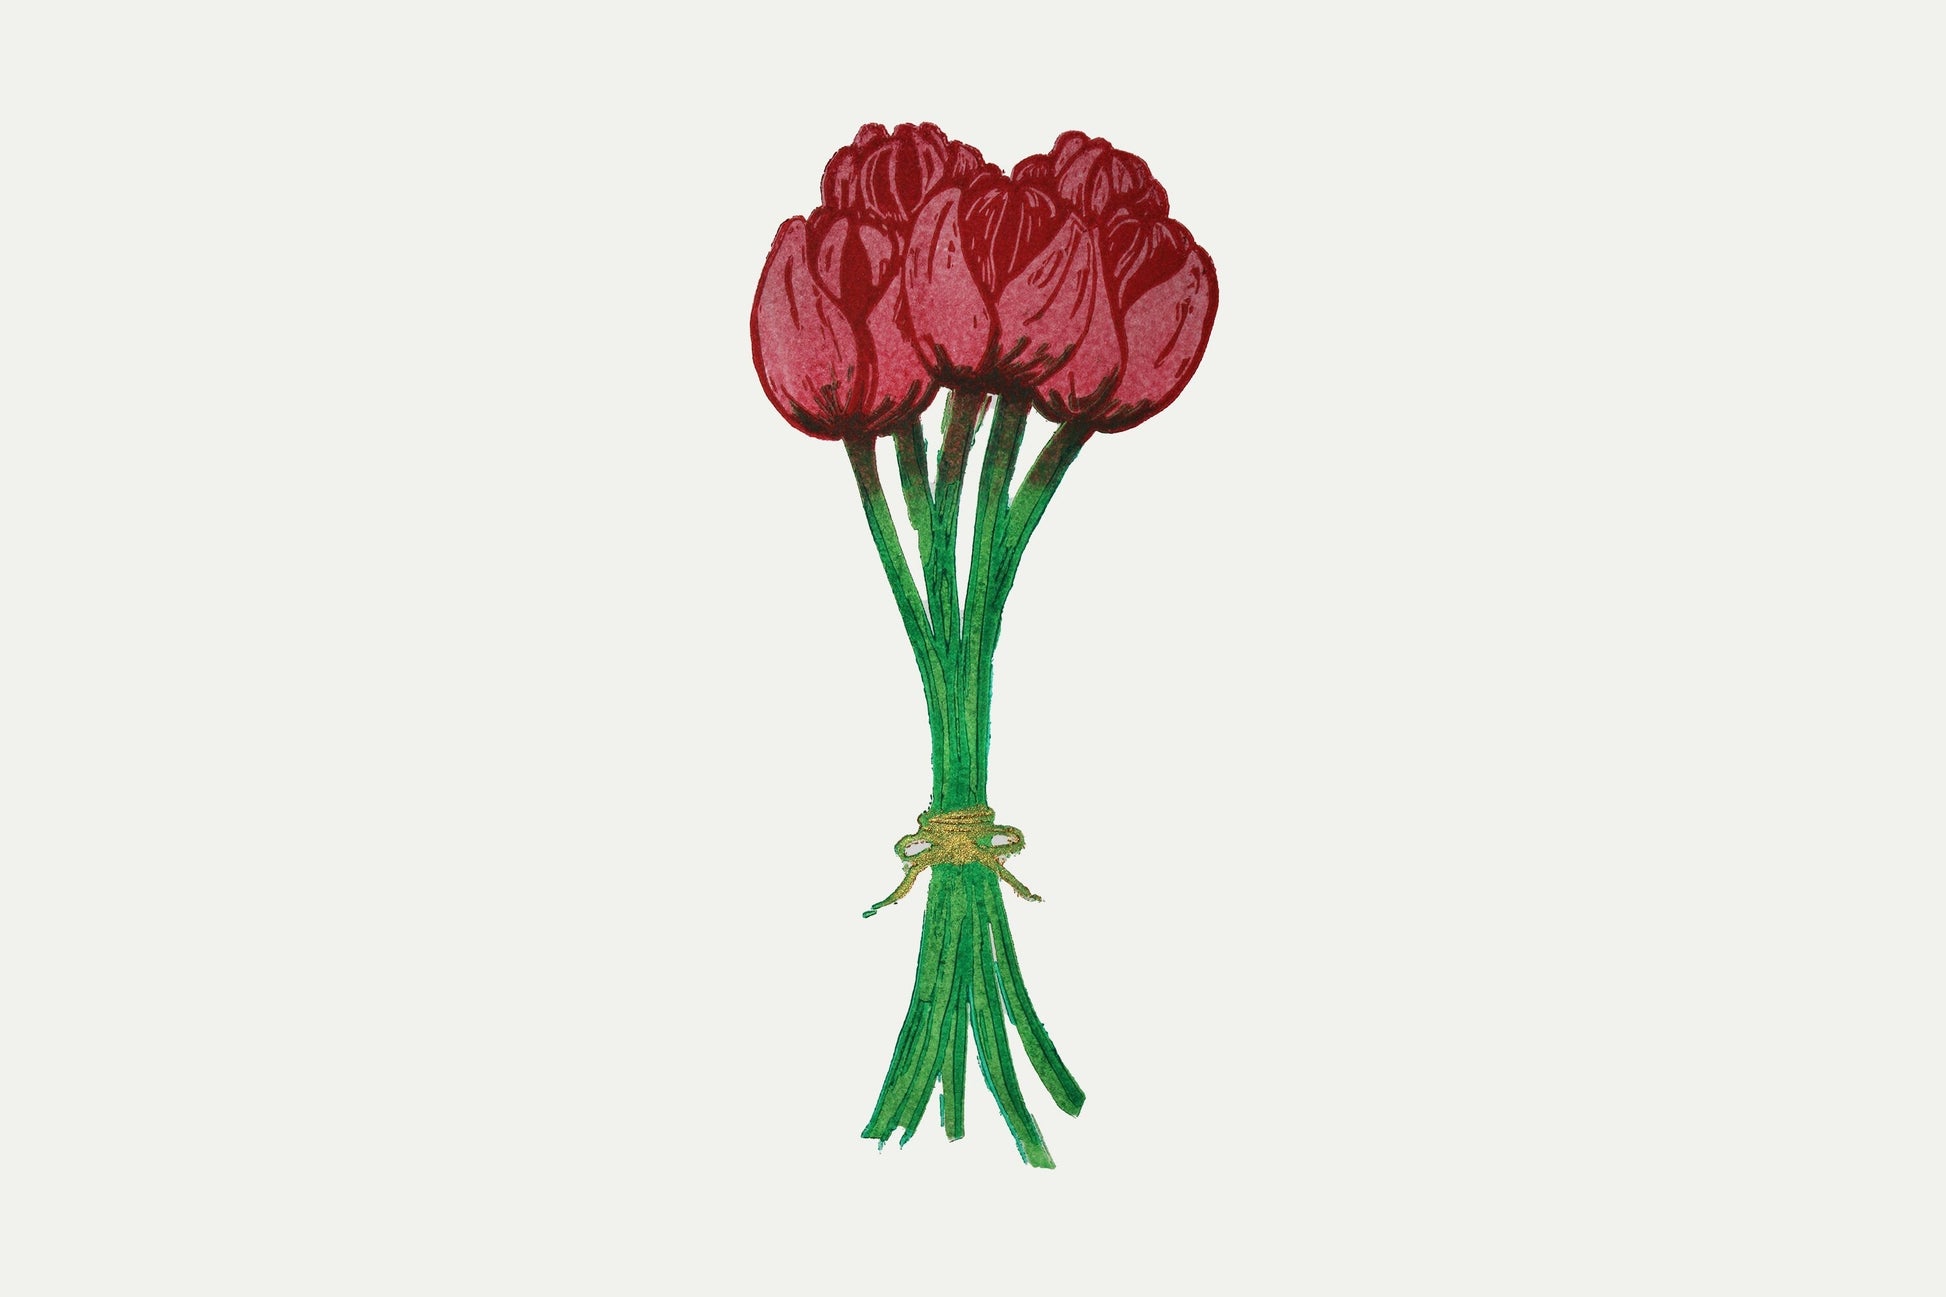 Springtime Tulips, Limited Edition Lino Print by The Rik Barwick Studio